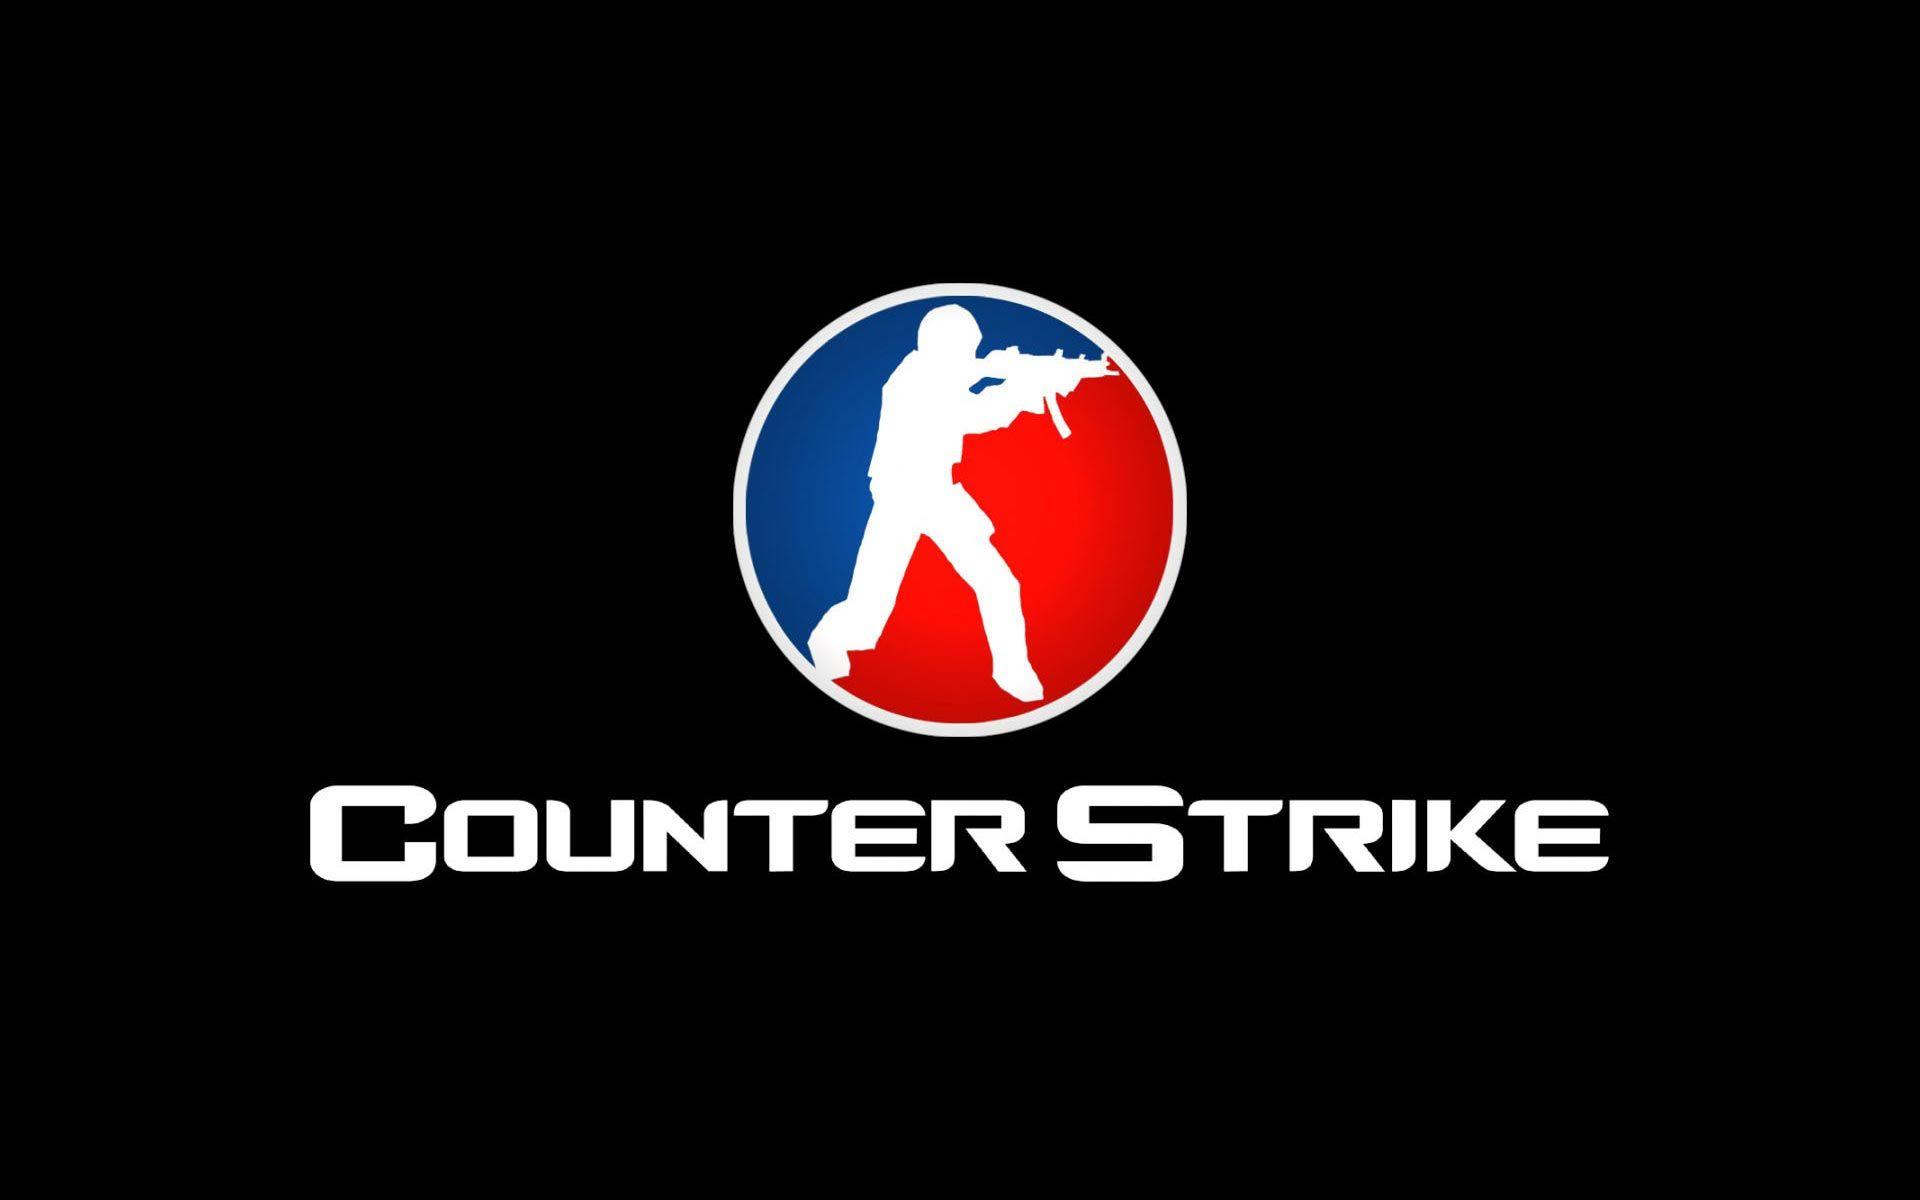 Counter Strike Logo wallpaper 182284